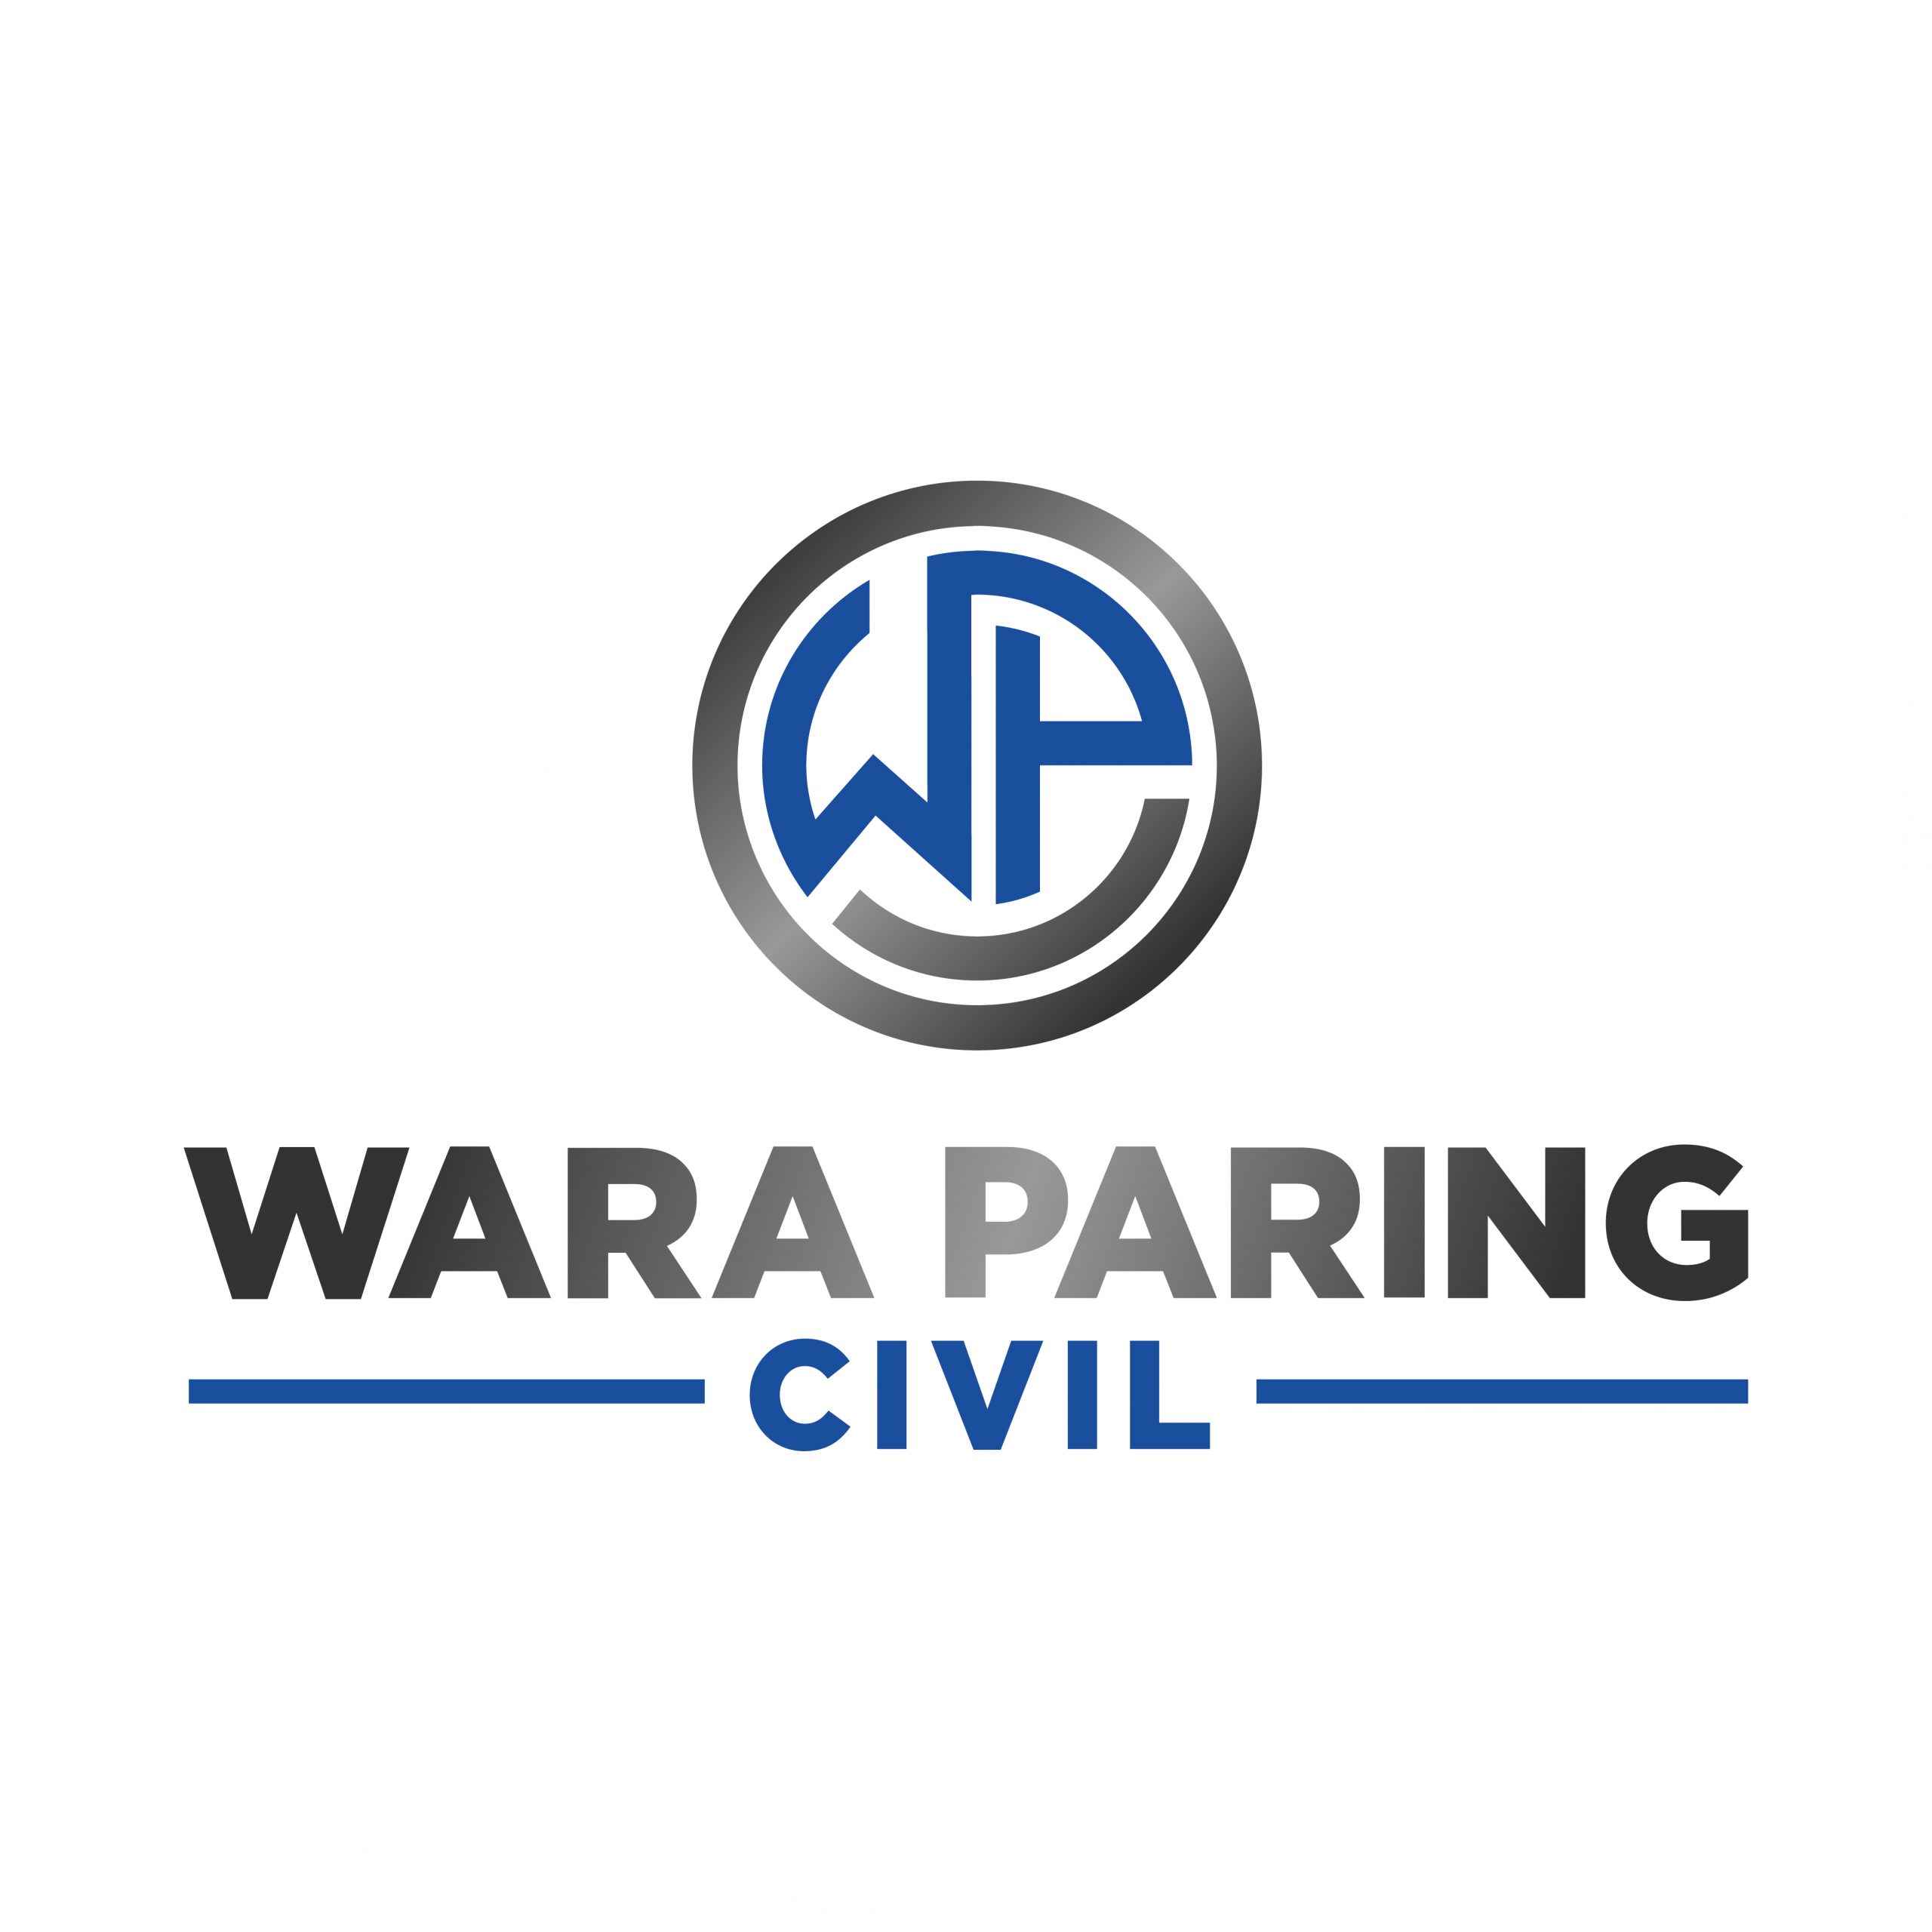 Wara Paring Civil | Non-Destructive Digging / Hydro-Excavation services